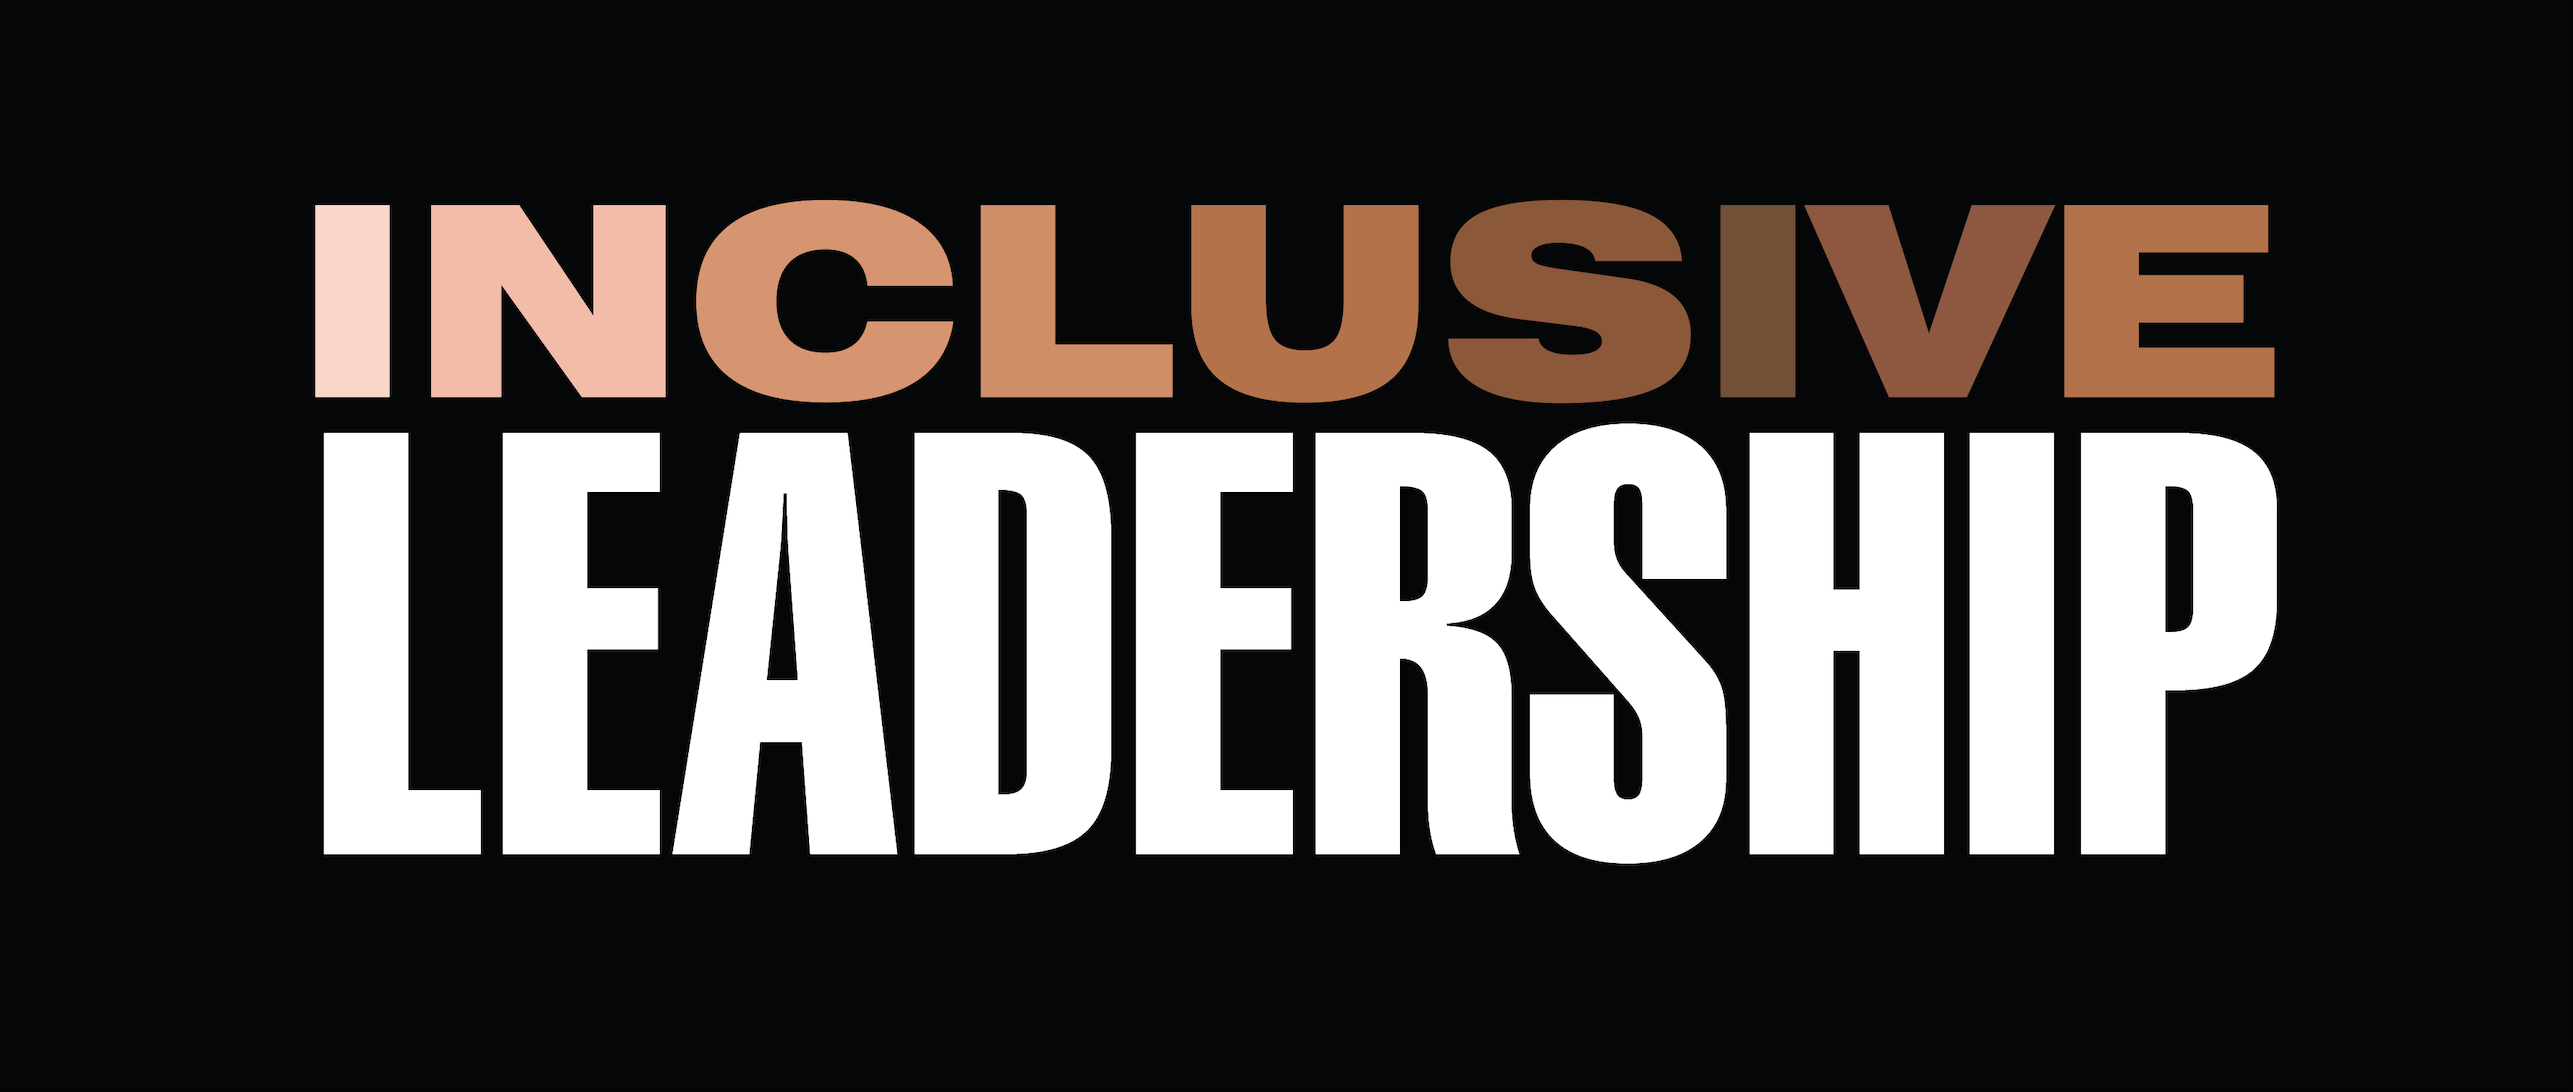 Inclusive Leadership Conference logo